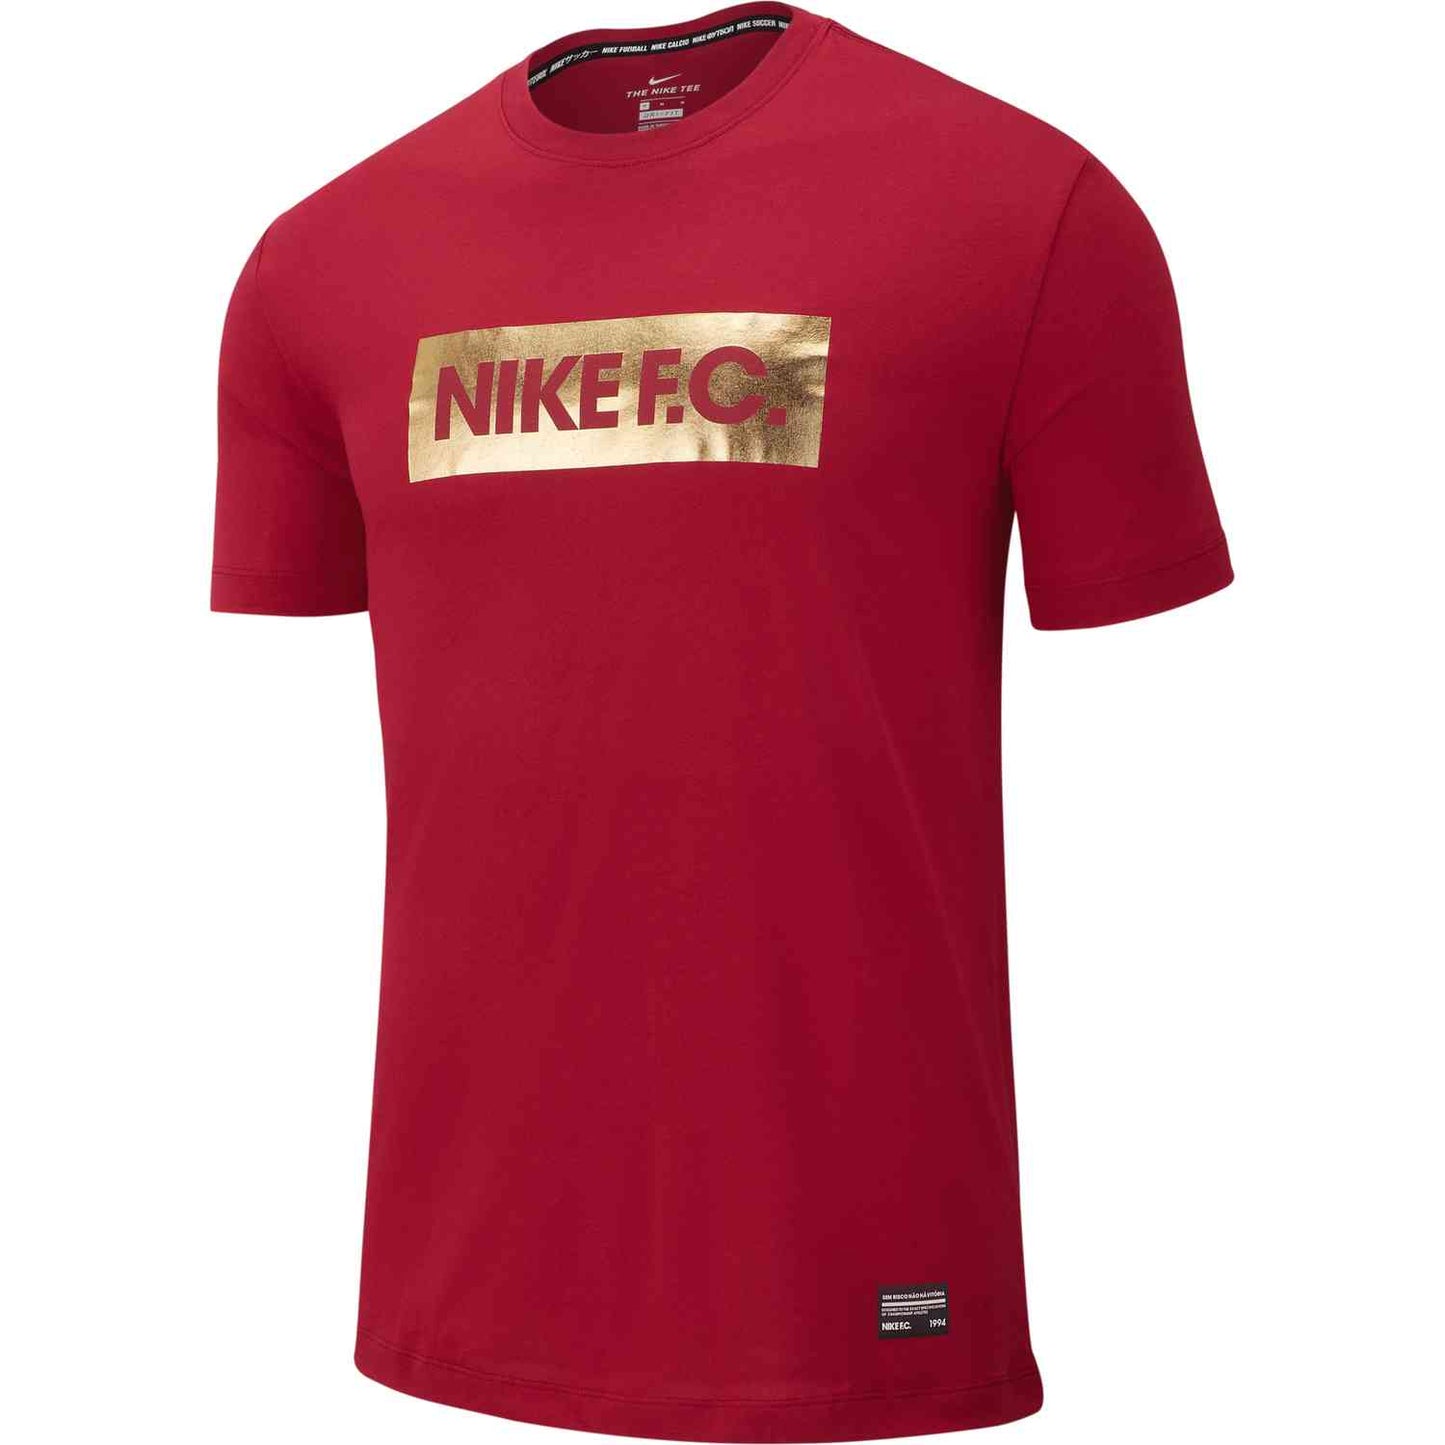 Nike F.C. Block Tee [8 Colors]